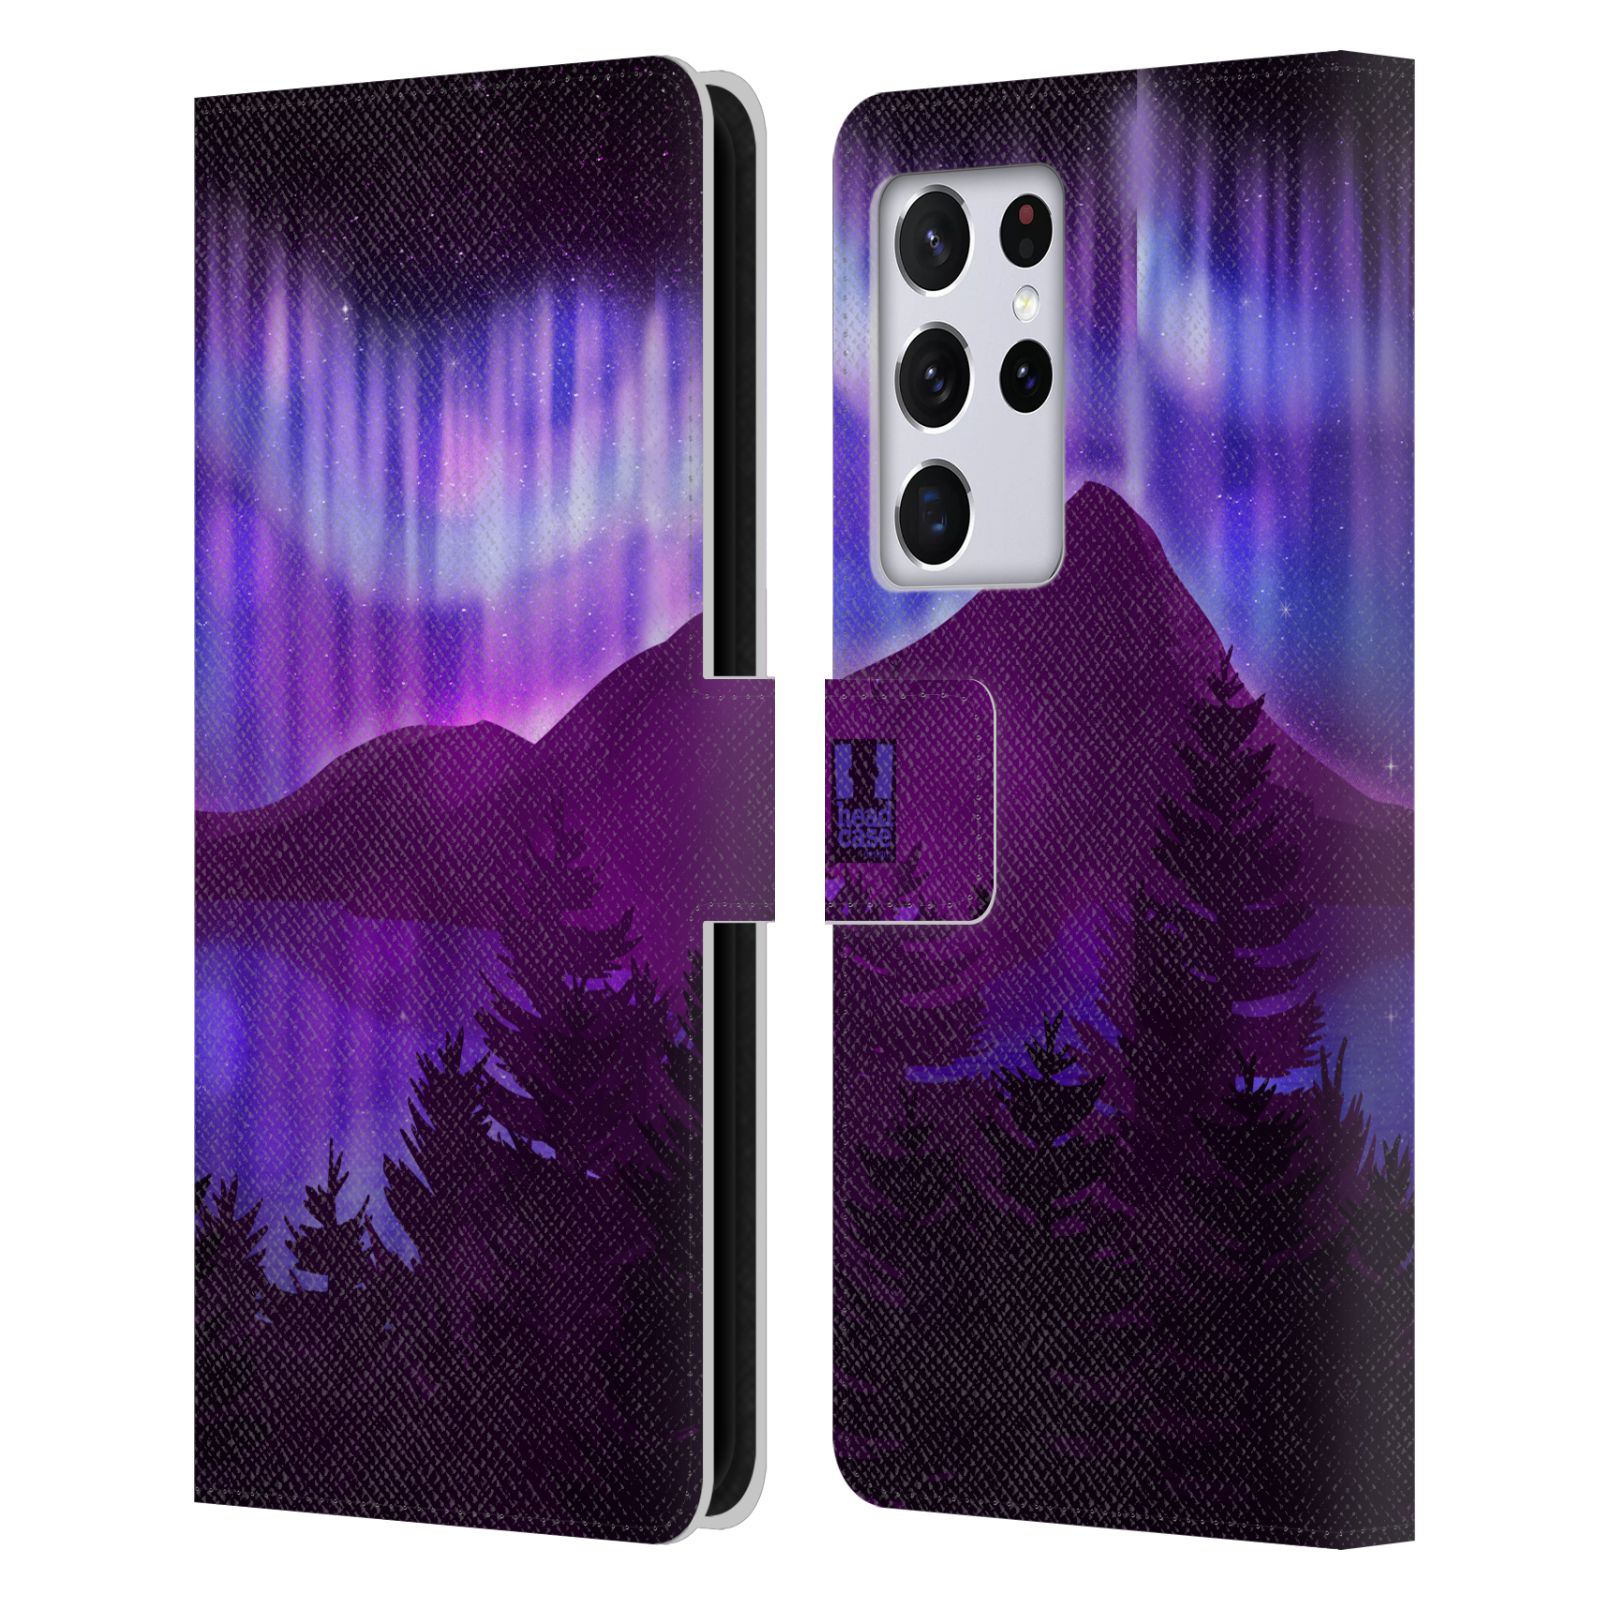 Pouzdro na mobil Samsung Galaxy S21 ULTRA 5G  - HEAD CASE - Hory a lesy fialový odstín